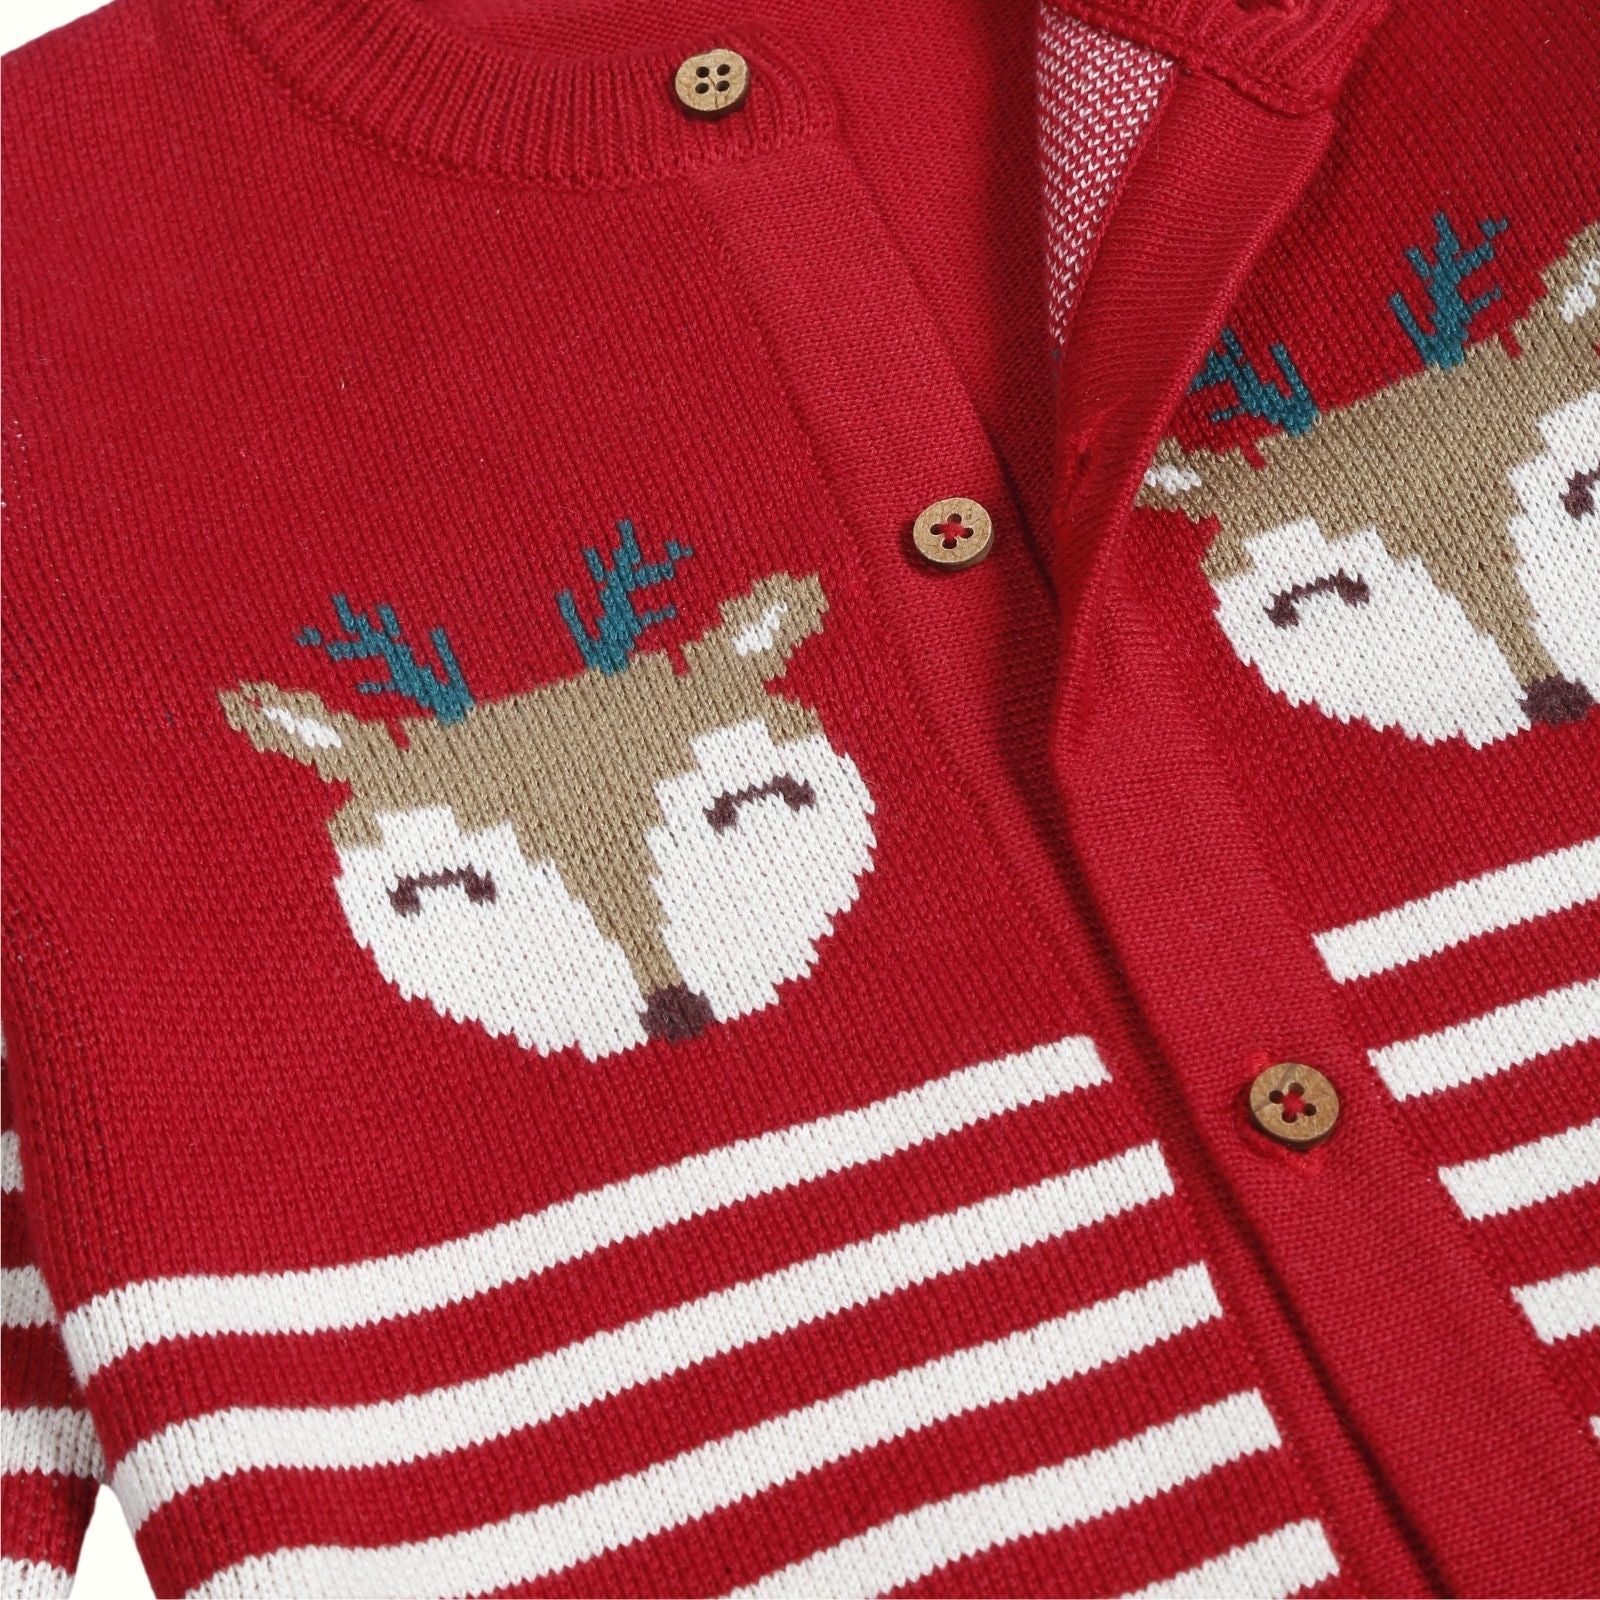 Greendeer Joyful Reindeer Jacquard 100% Cotton Sweater - Cherry Red